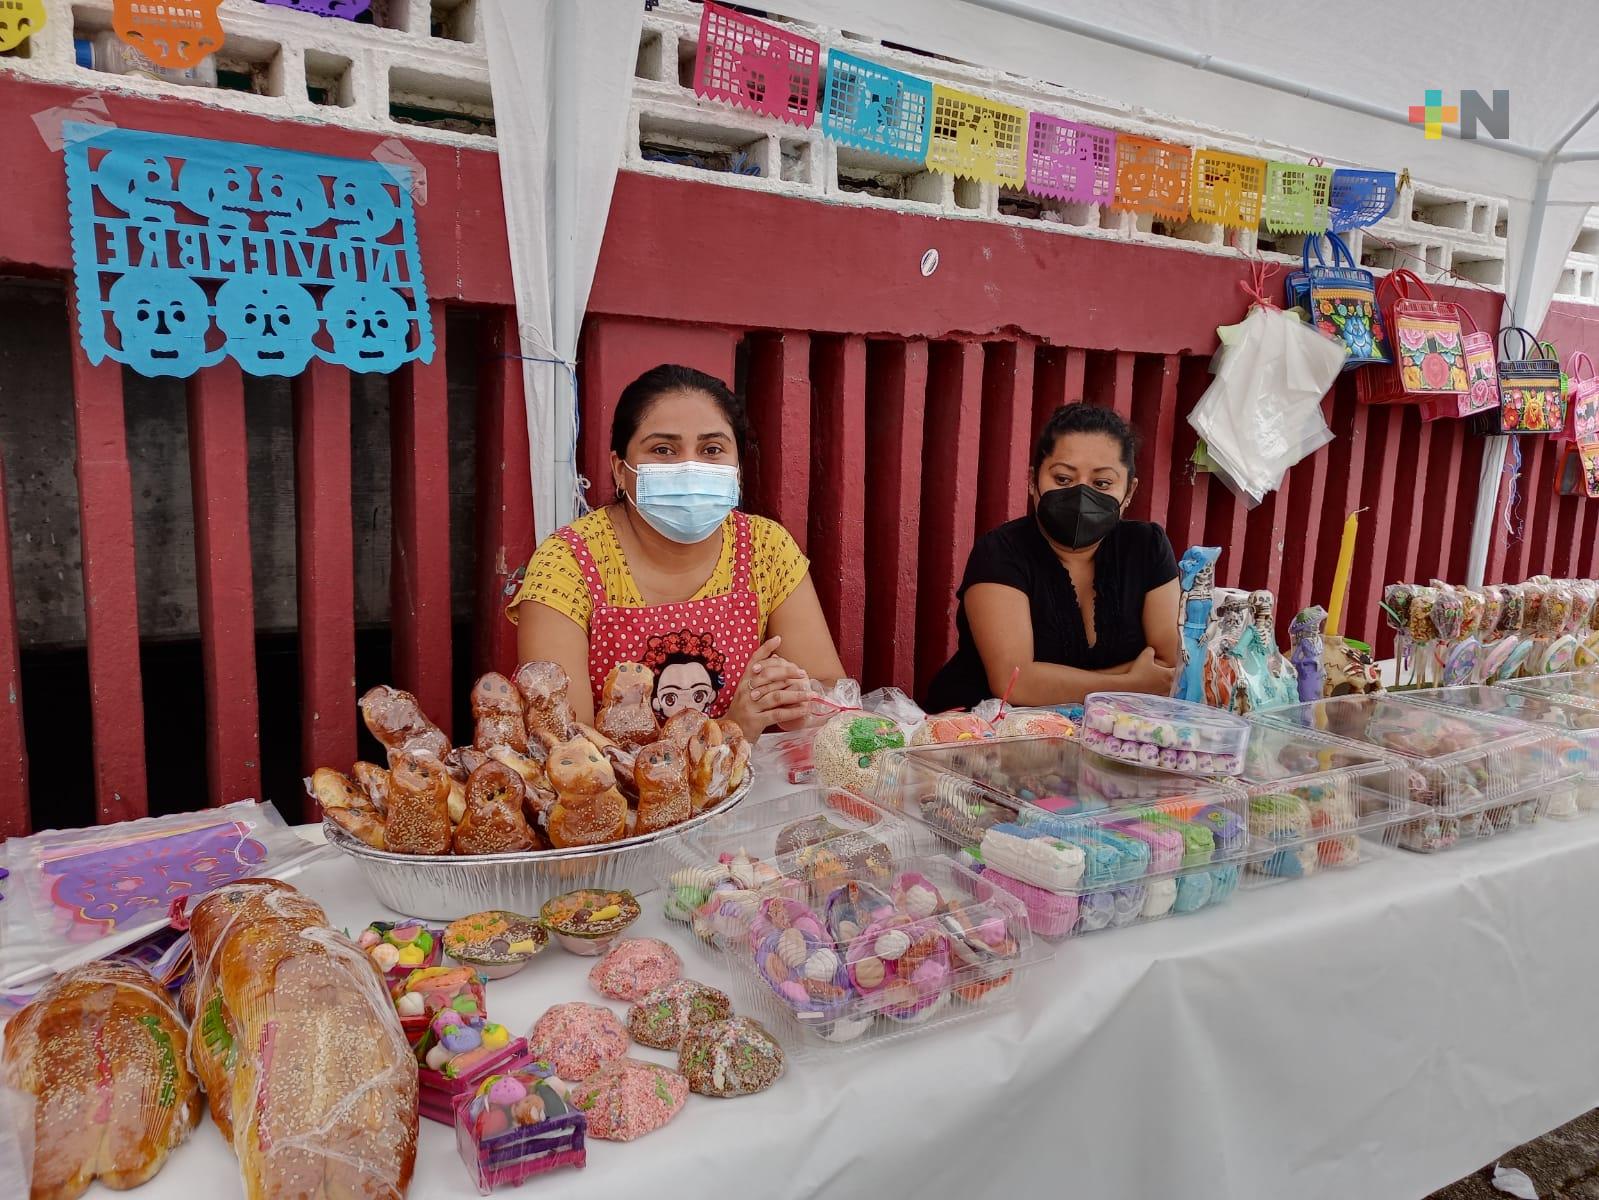 Por Día de Muertos, comerciantes iniciaron ventas en calles de Coatzacoalcos